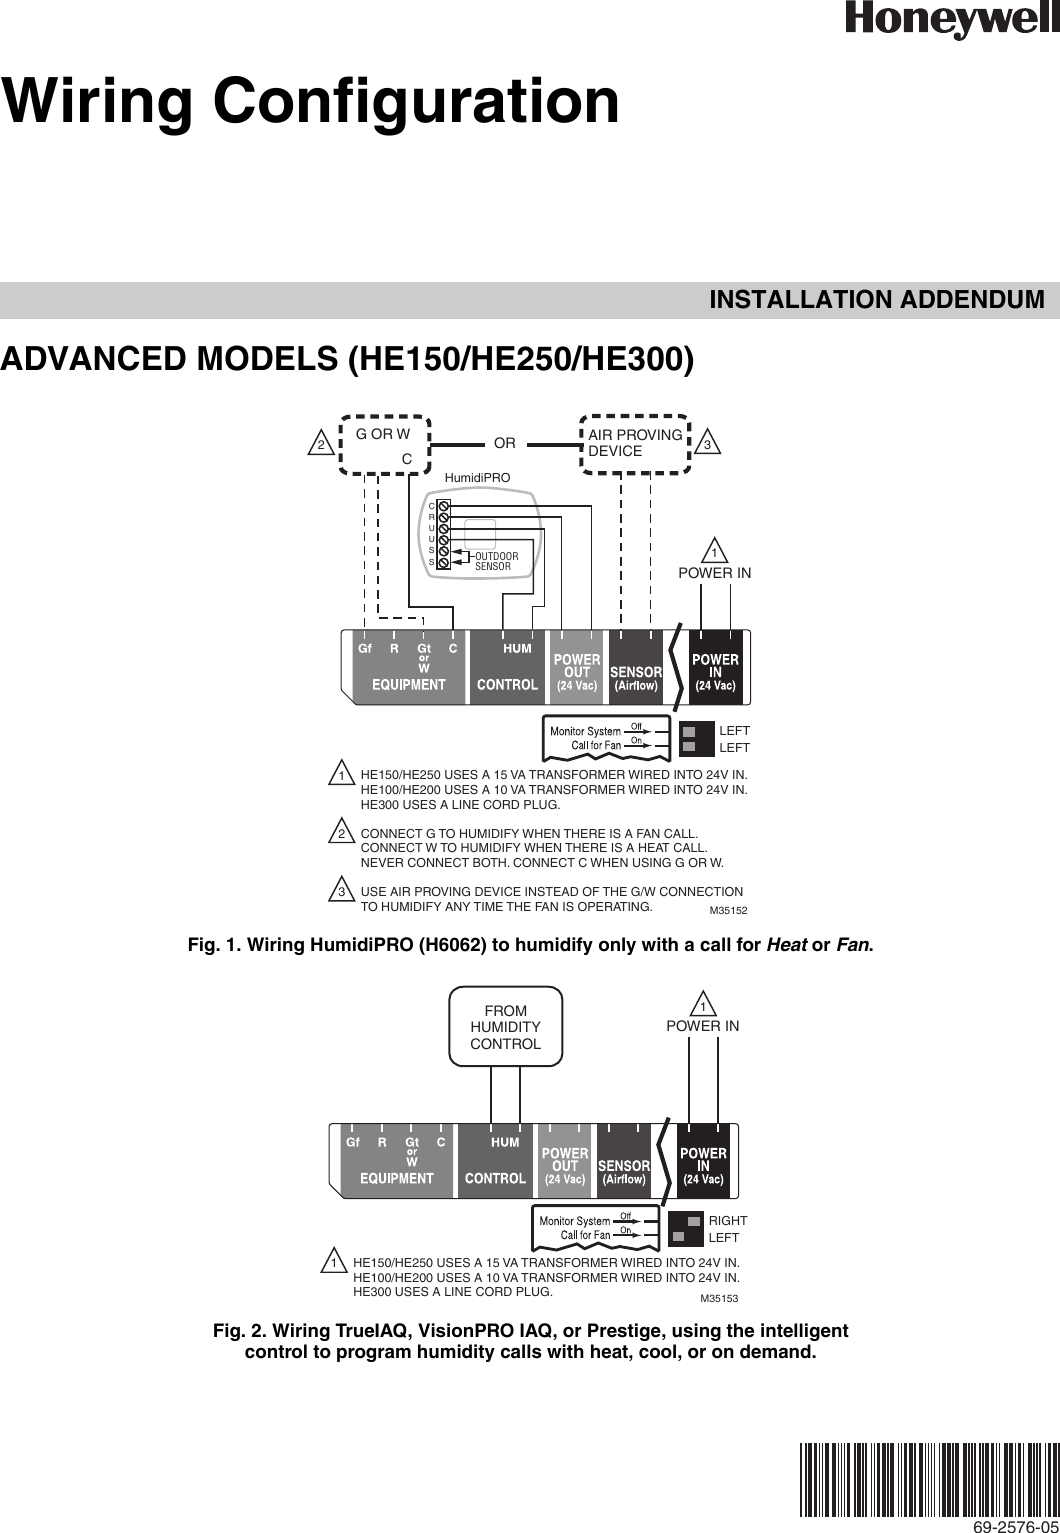 Wiring Diagram For Honeywell Visionpro Iaq